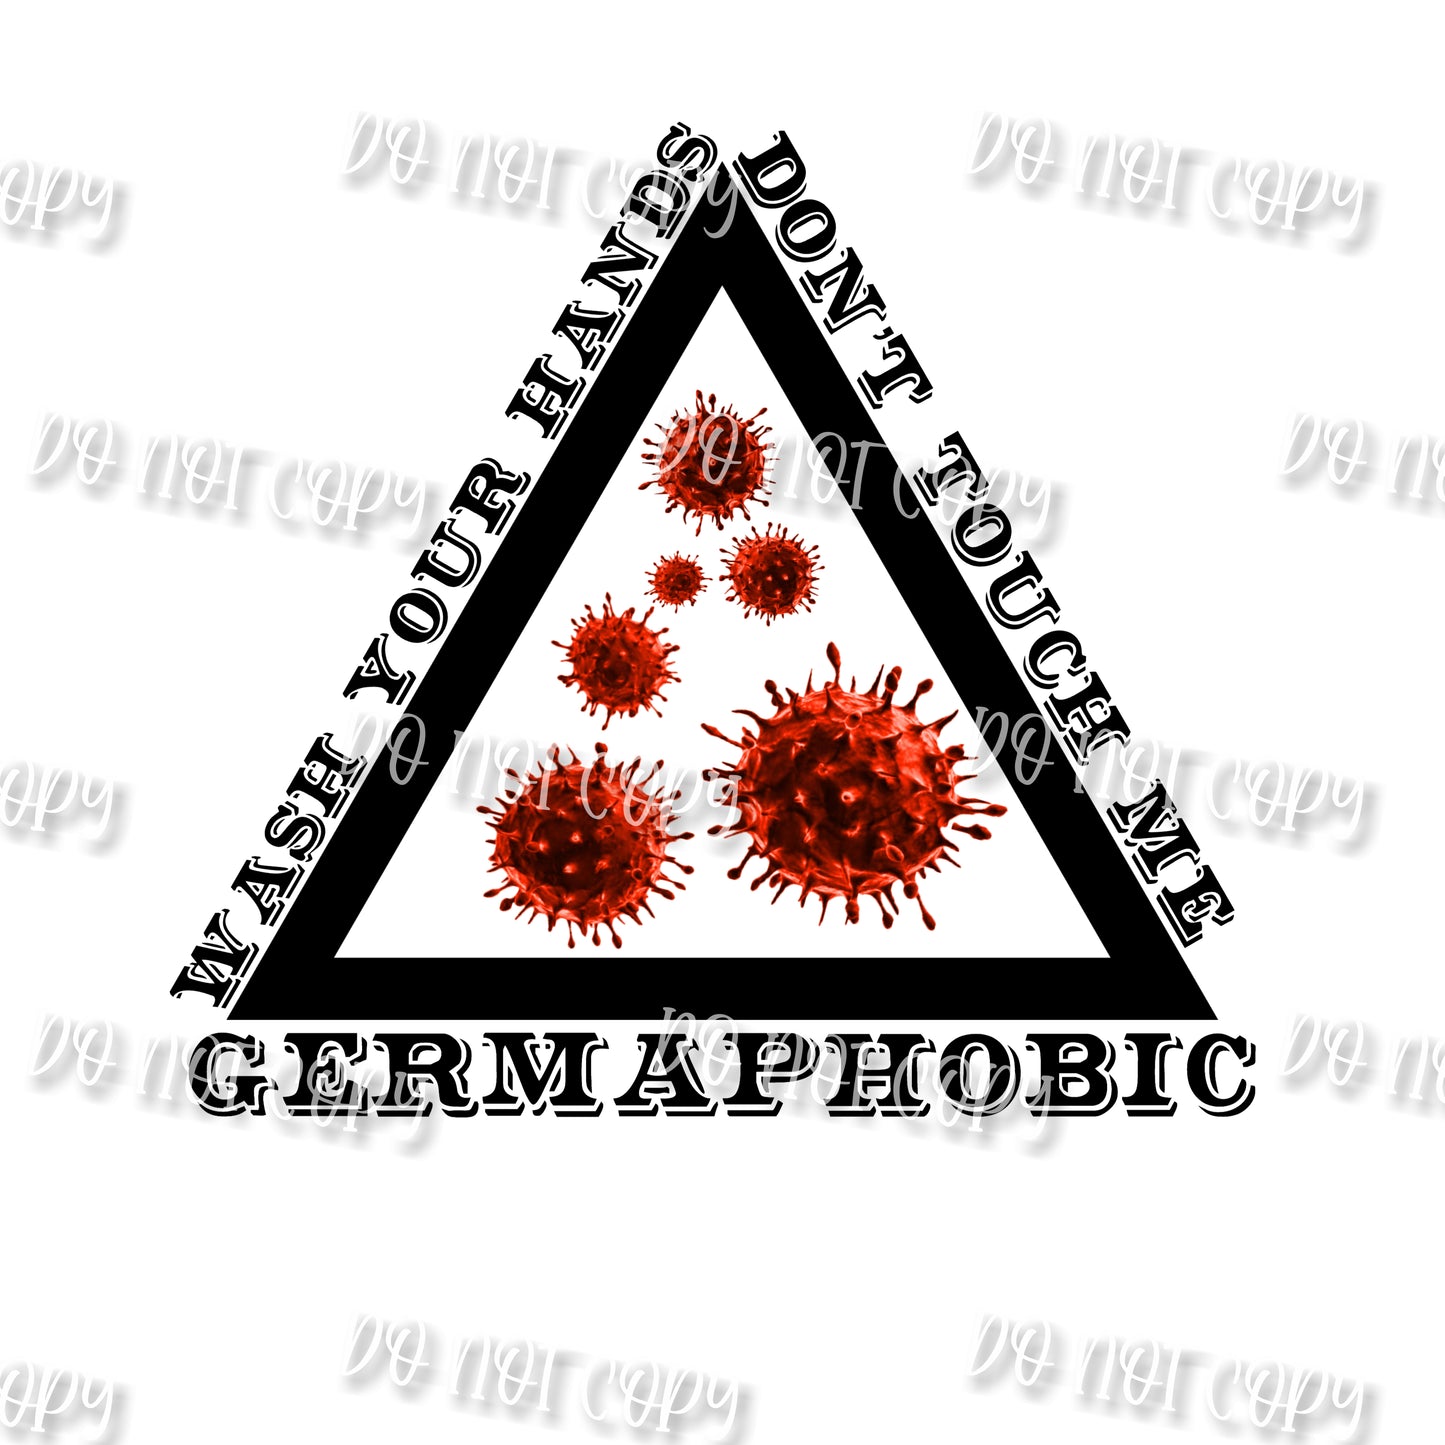 Germaphobic